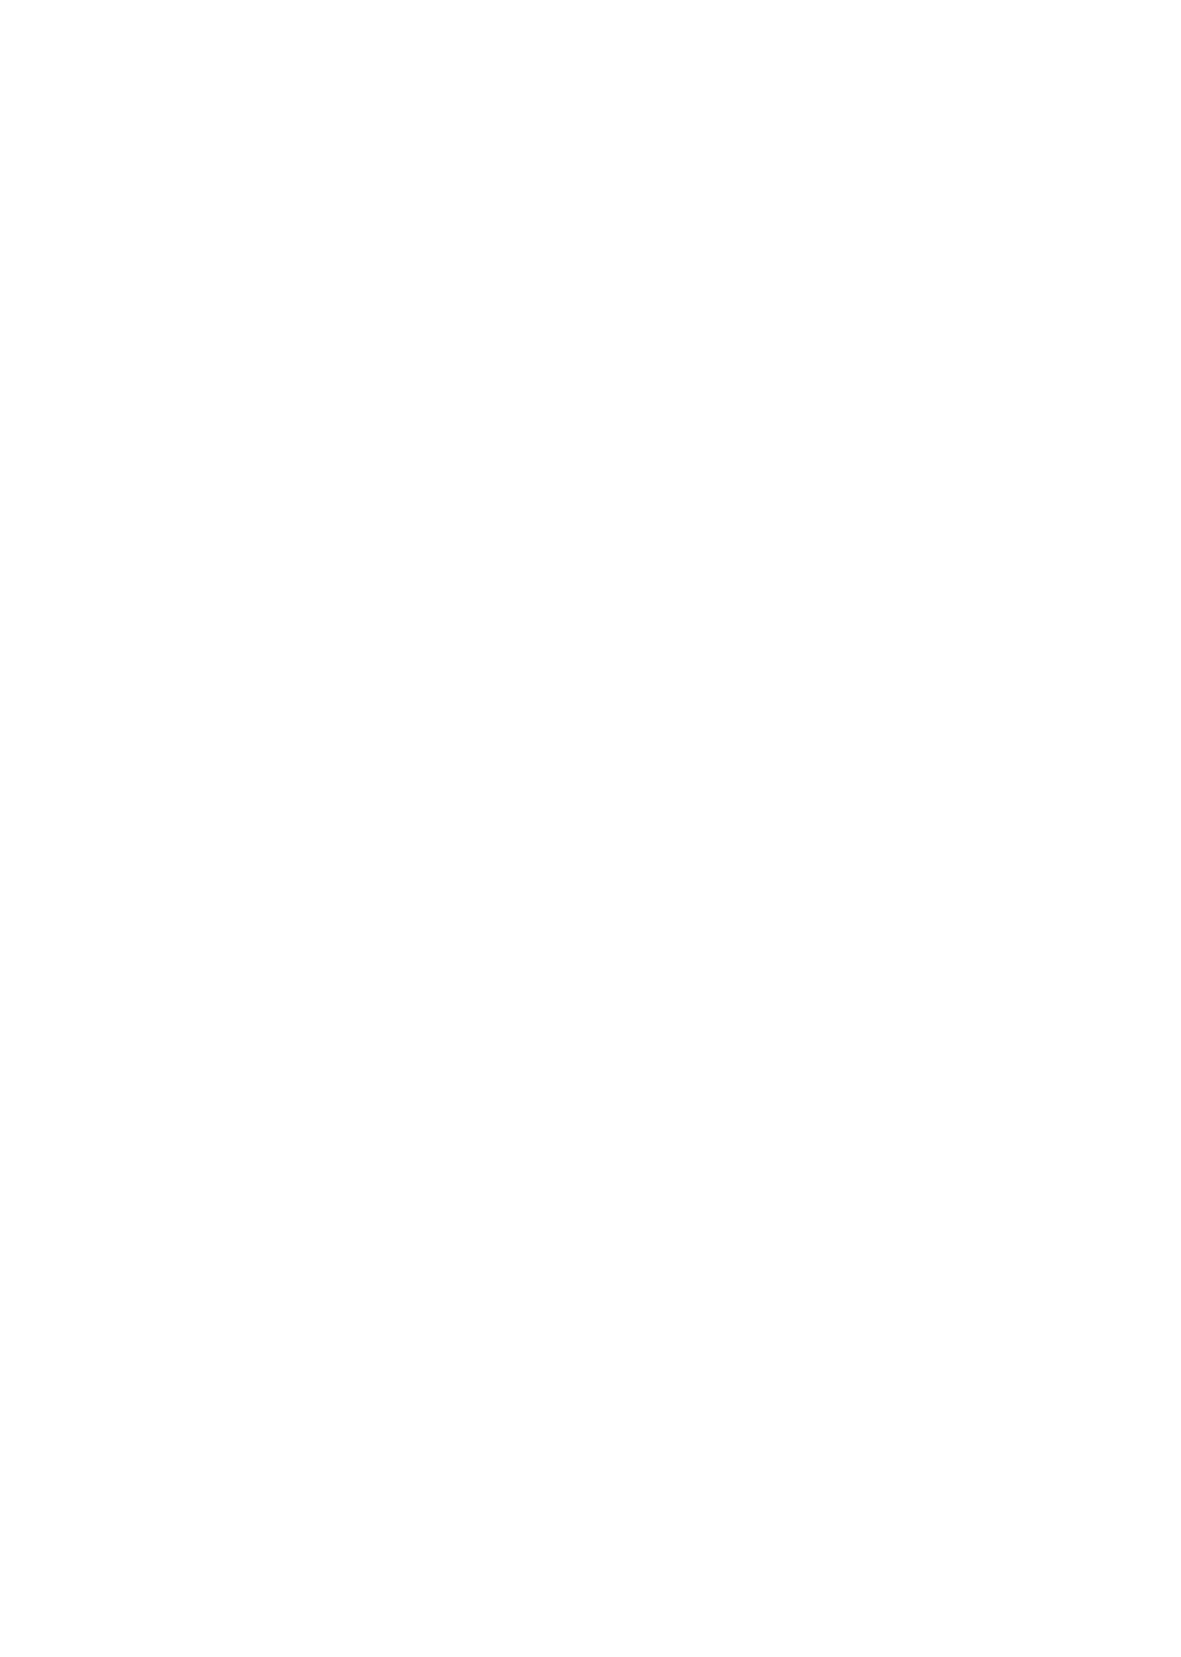 WWSC logo -words-STACK-transparent_white.png